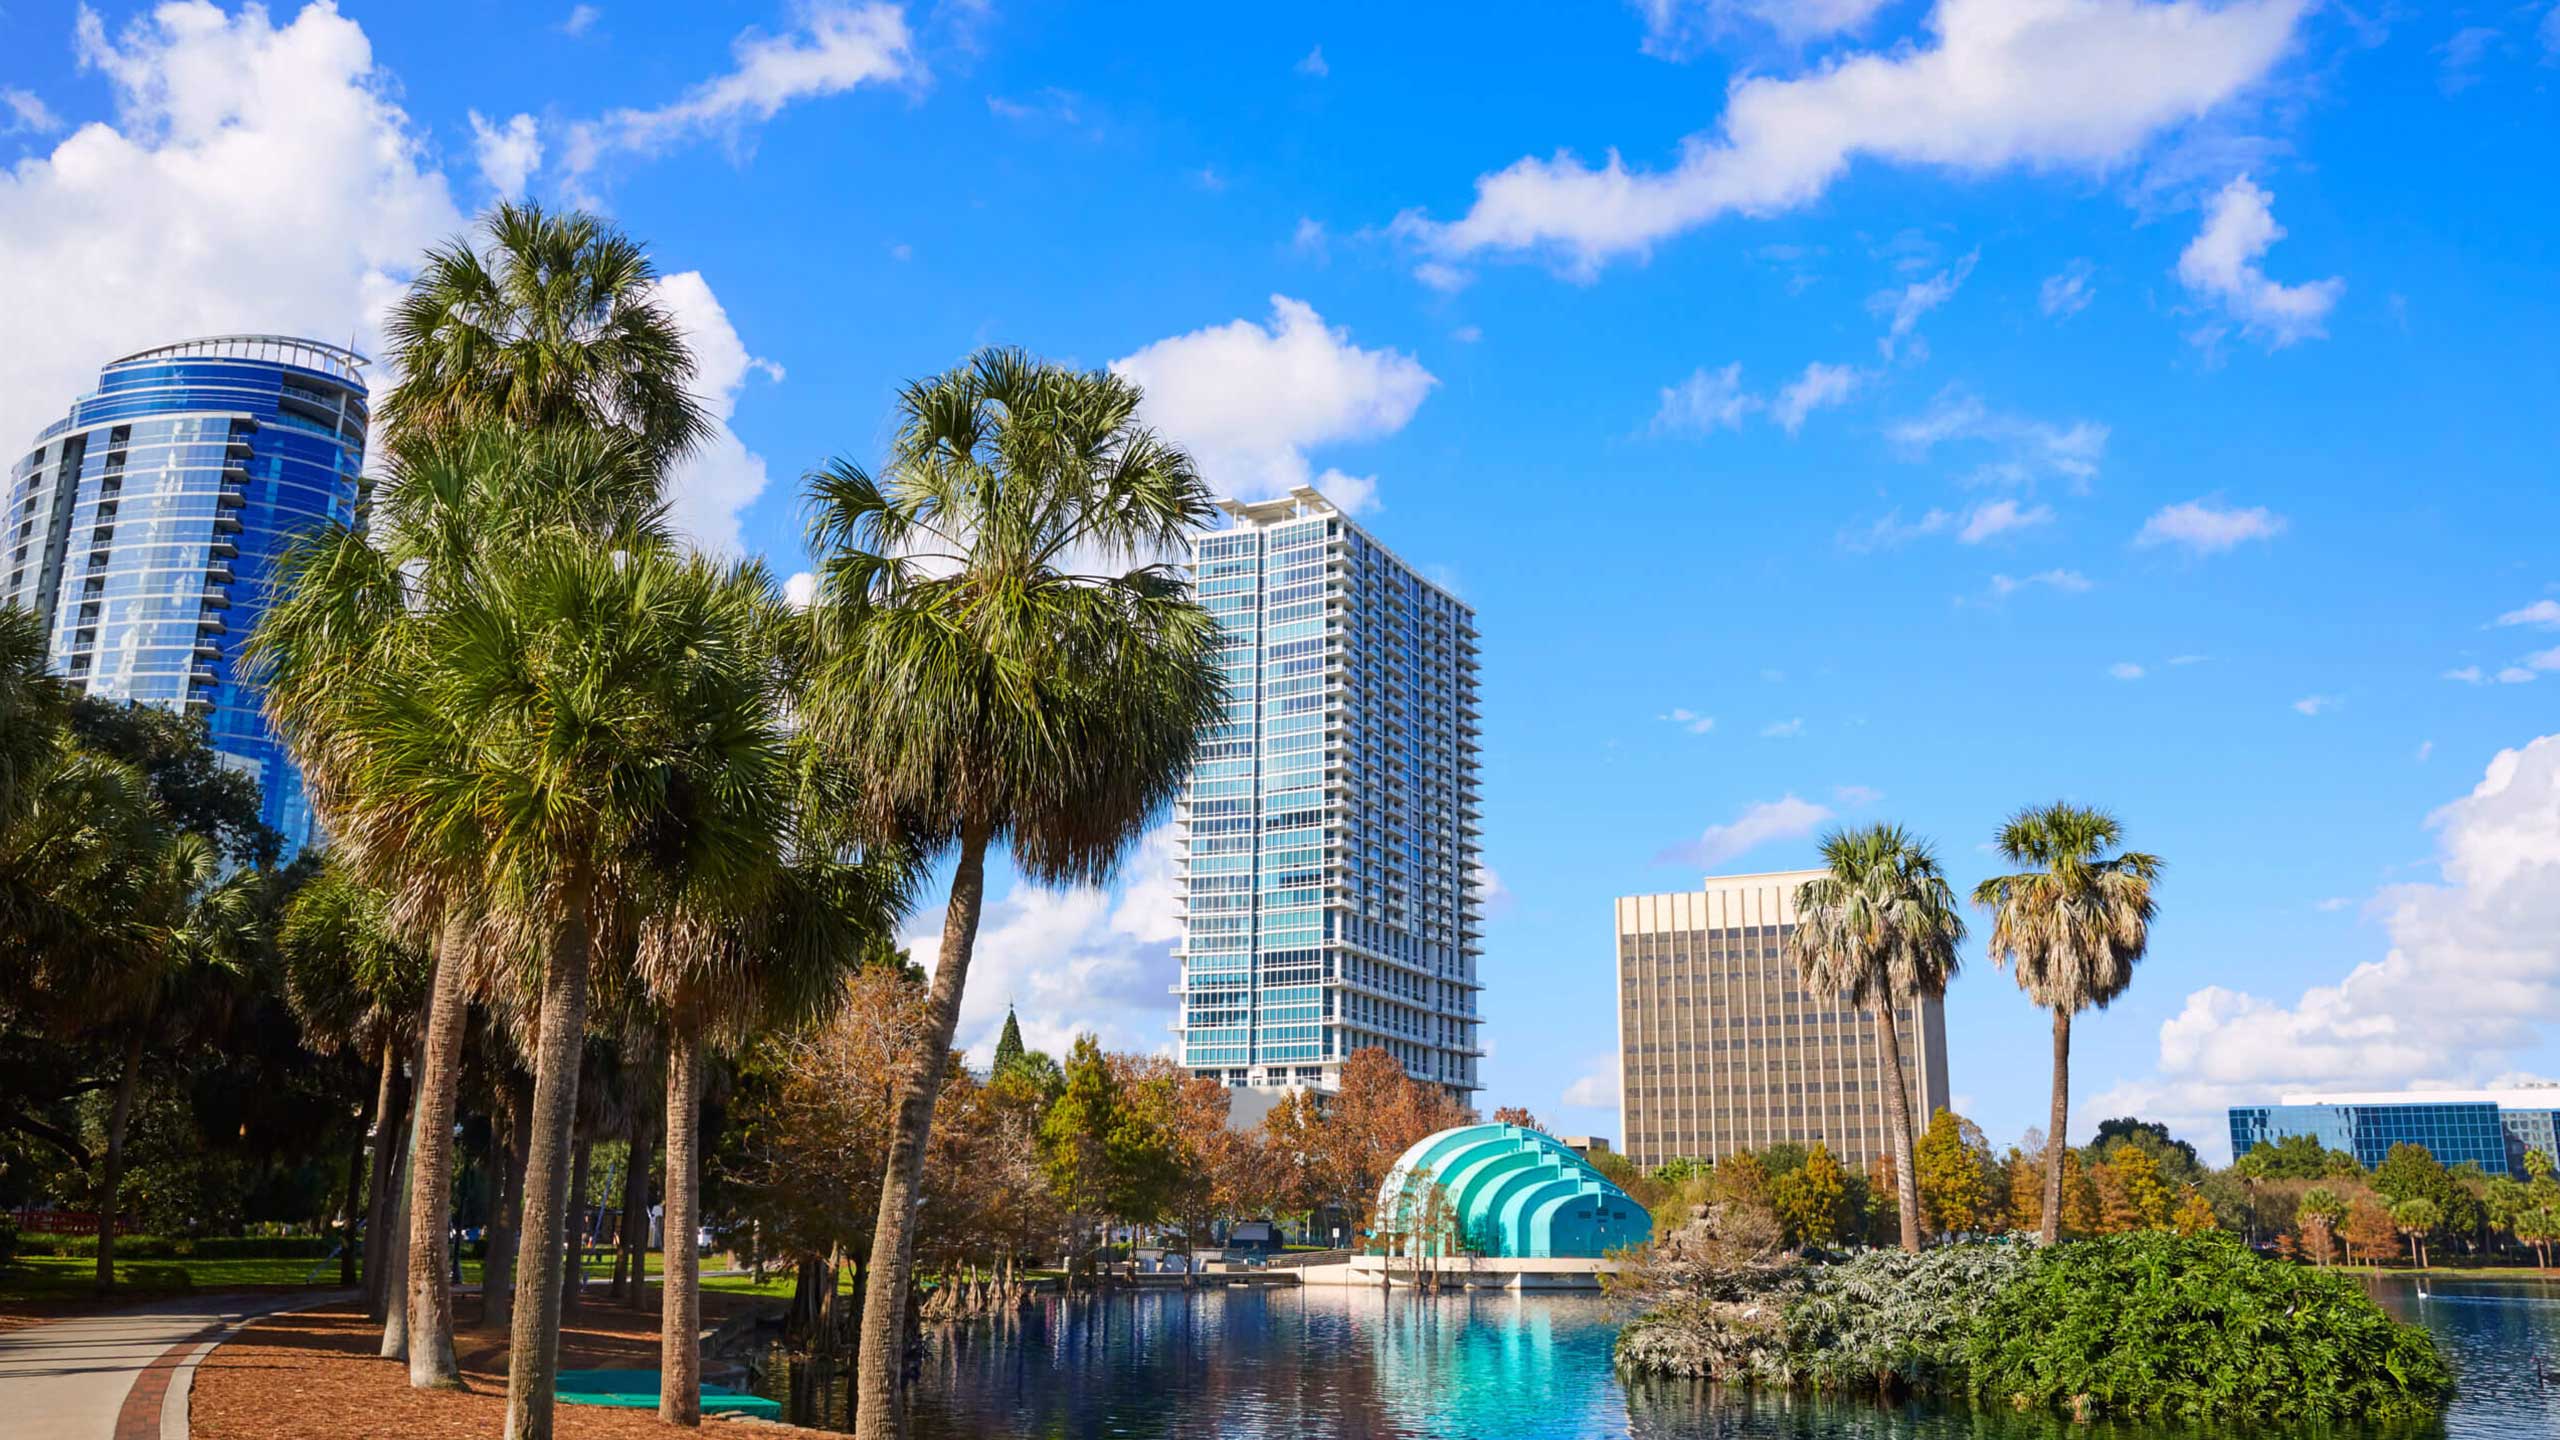 Photo of the Orlando city view